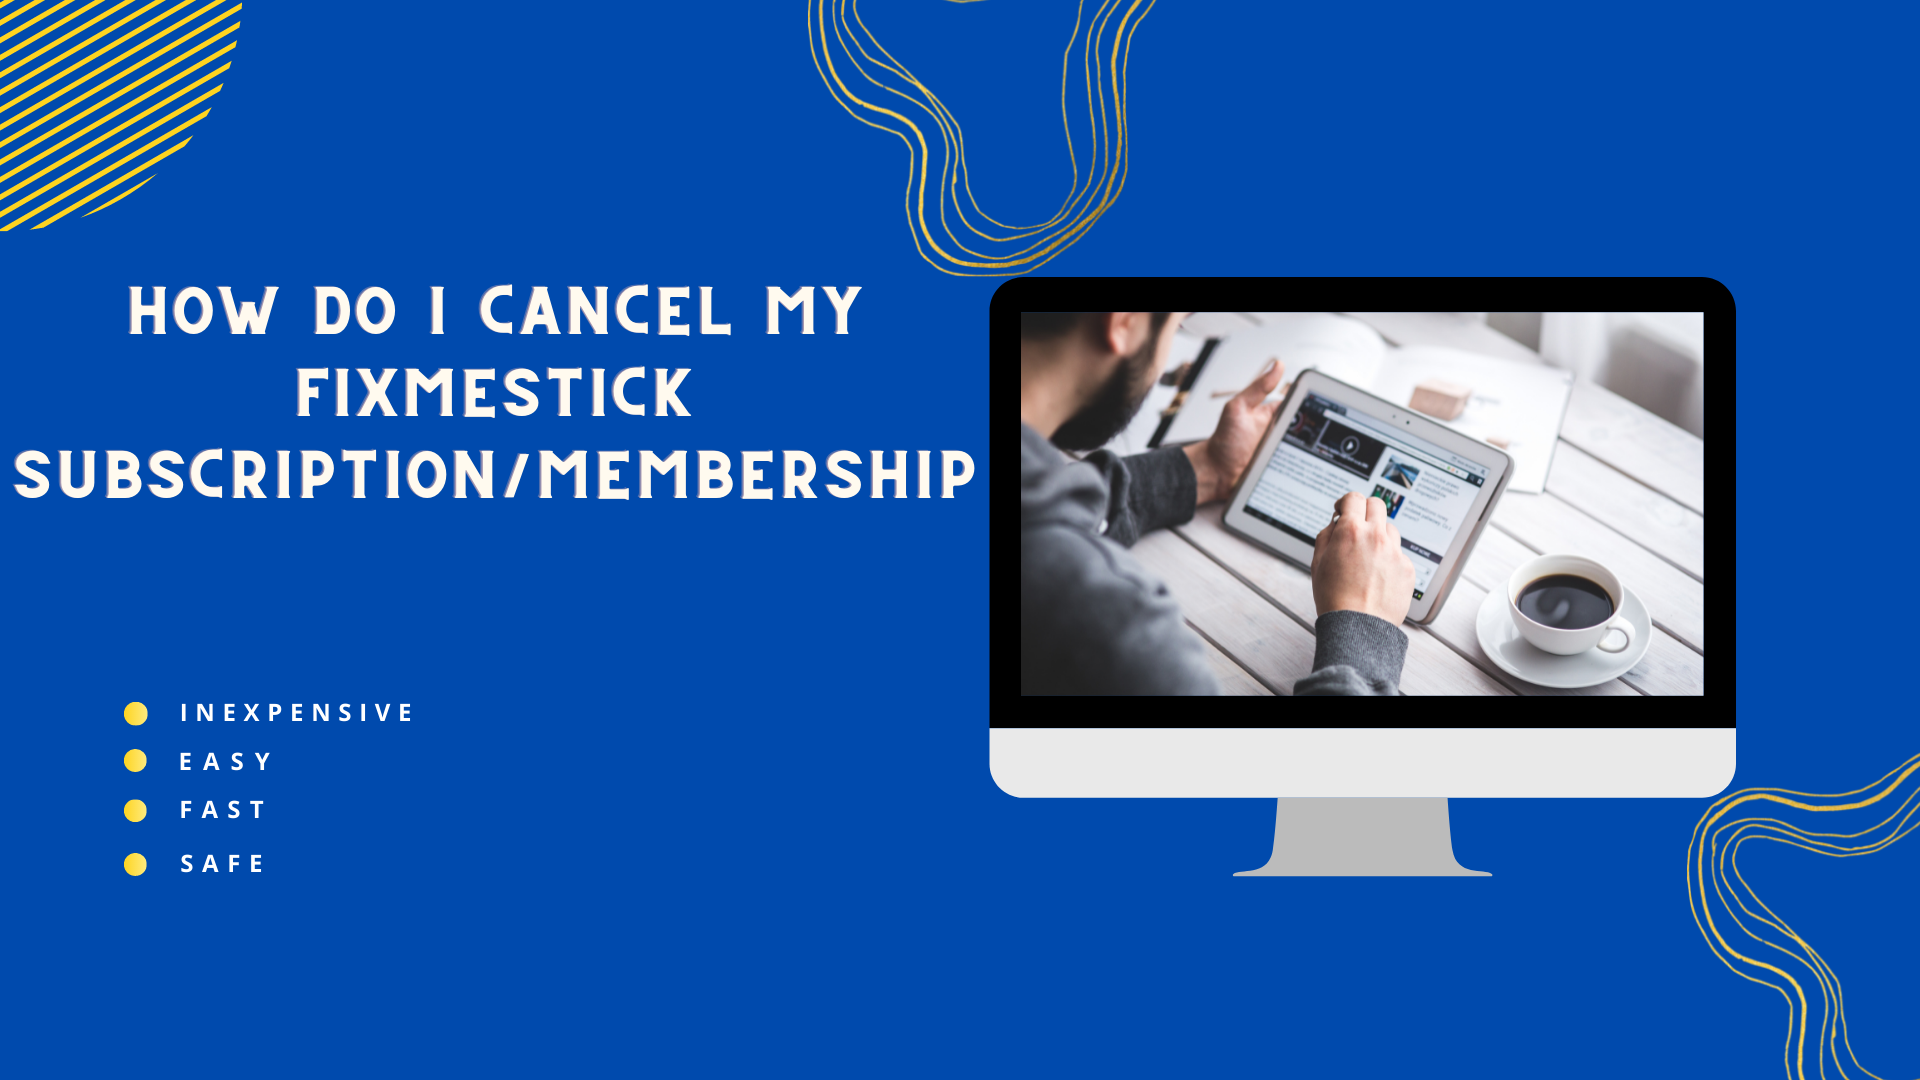 Cancel-My-Fix-Me-Stick-SubscriptionMembership